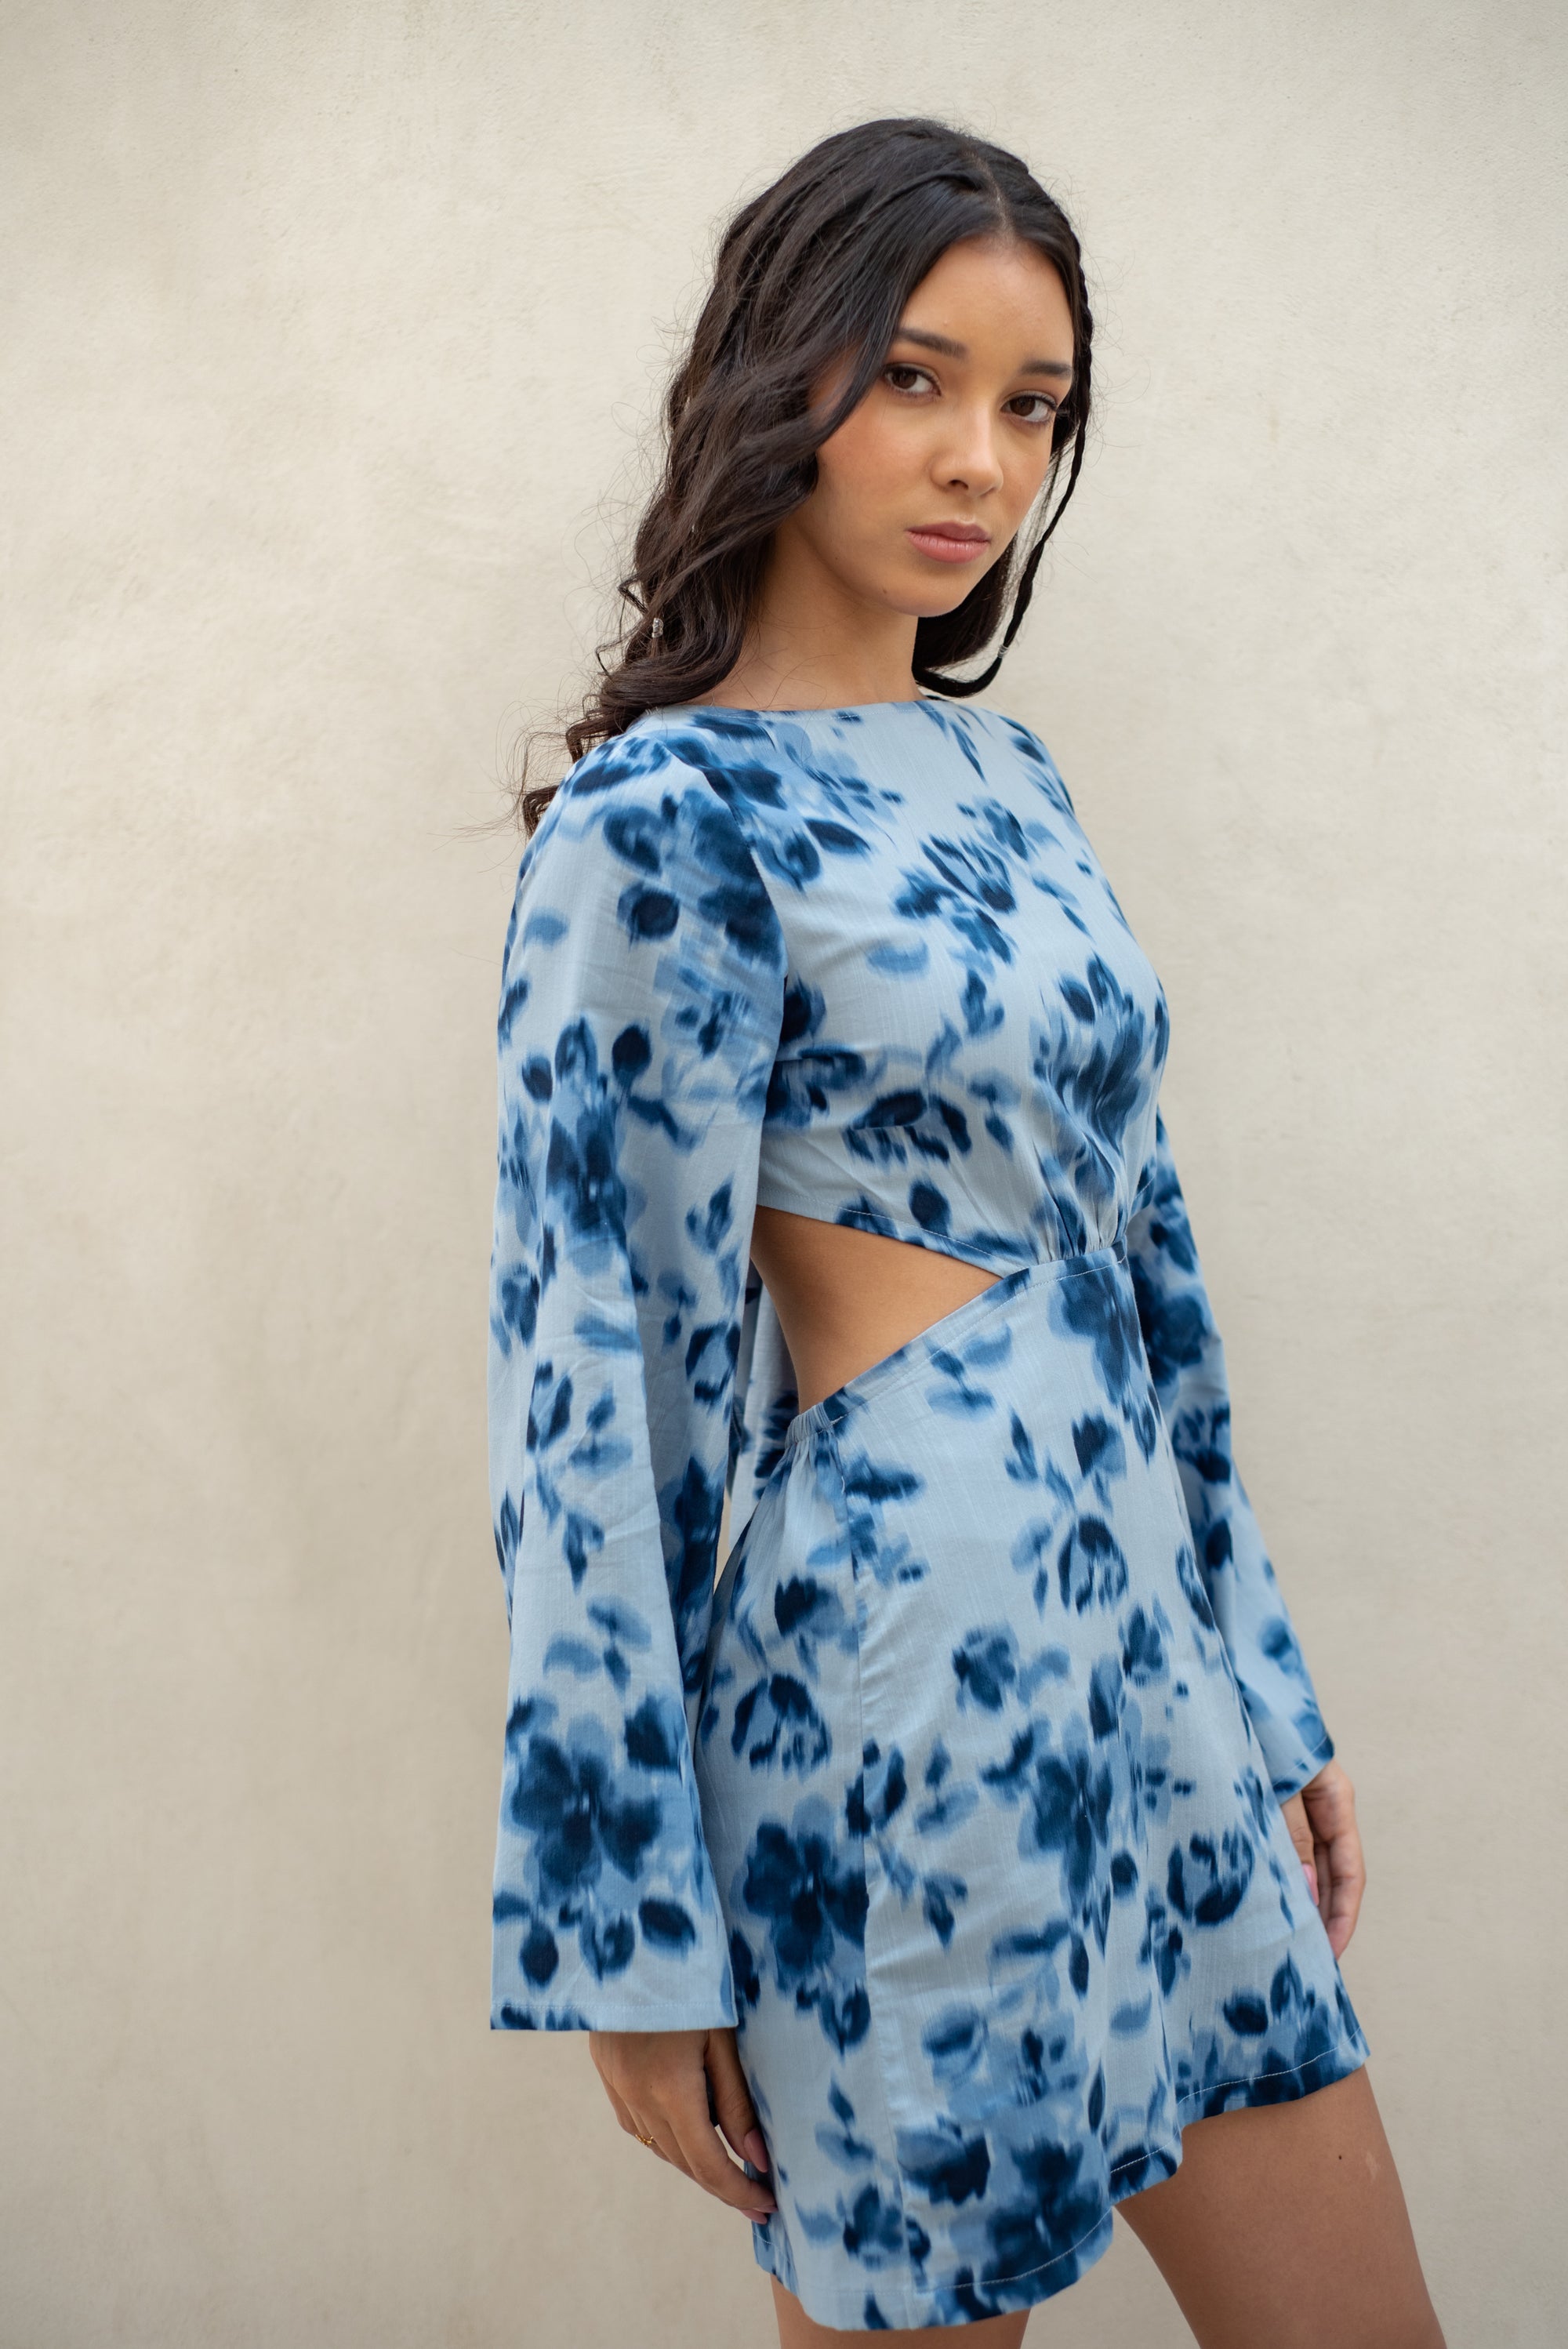 Sapphire Blaze Dress front shot image with model